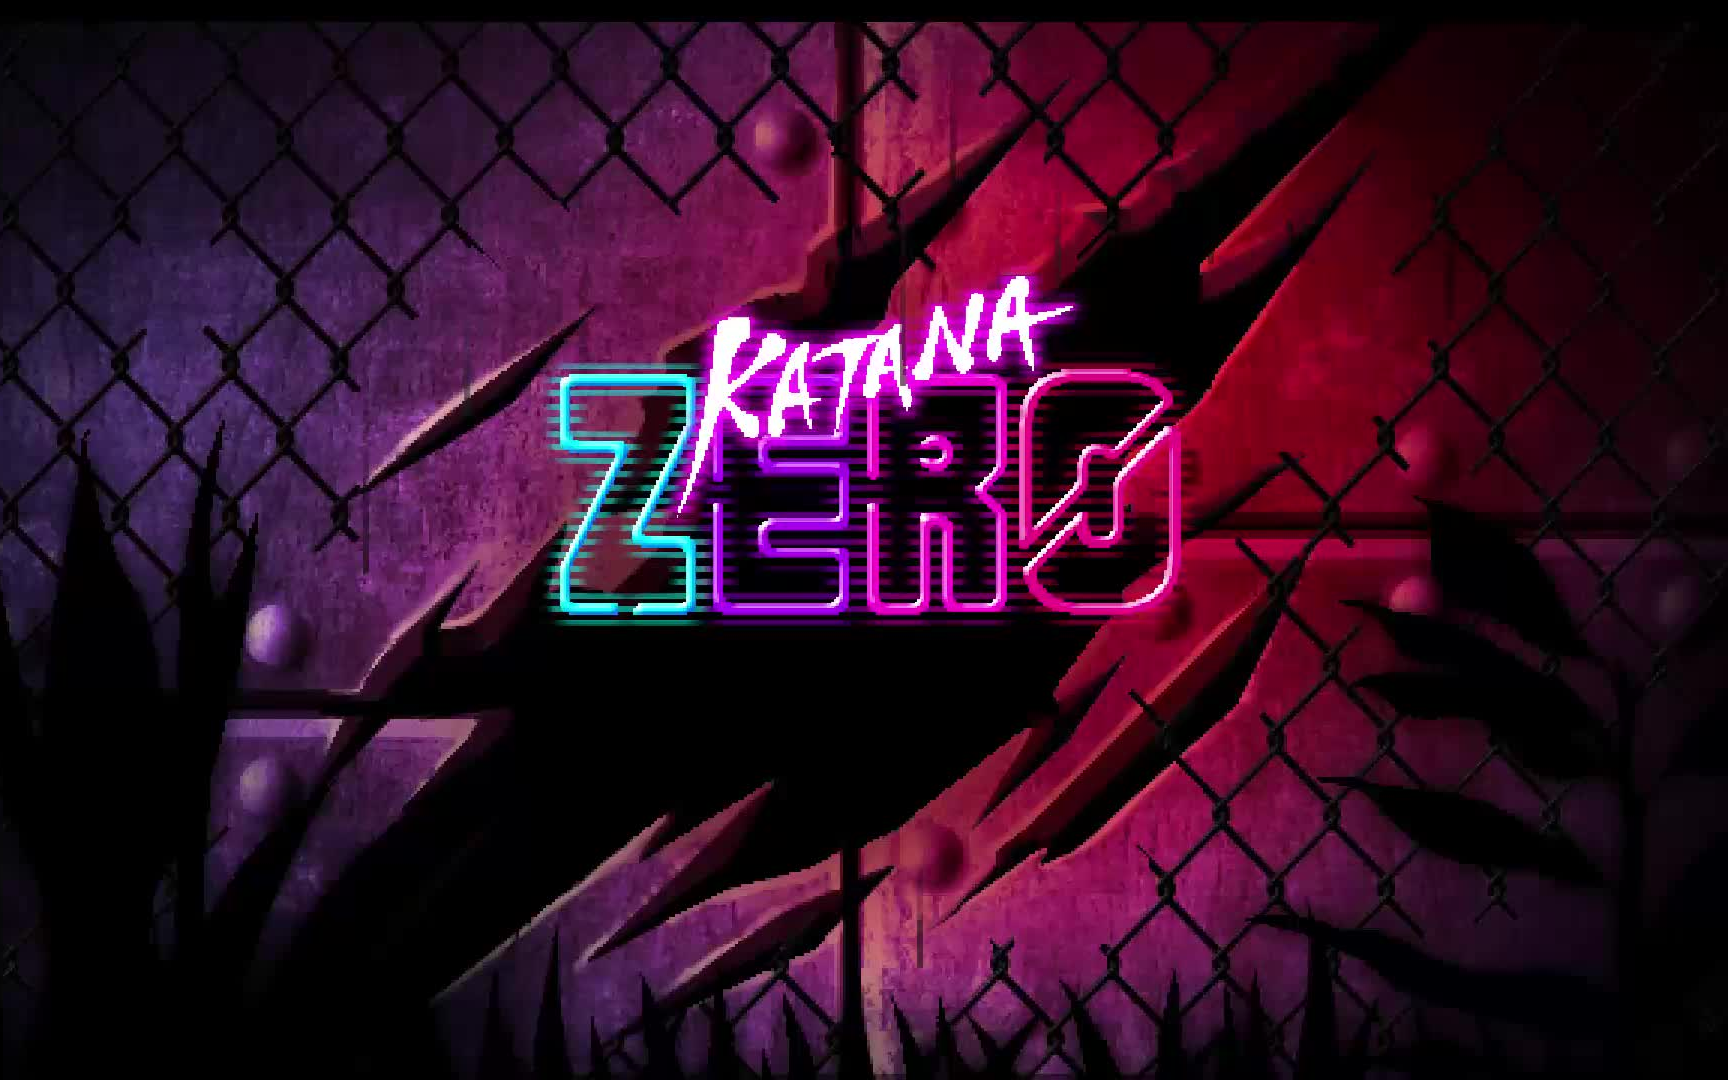 katana zero ost download free